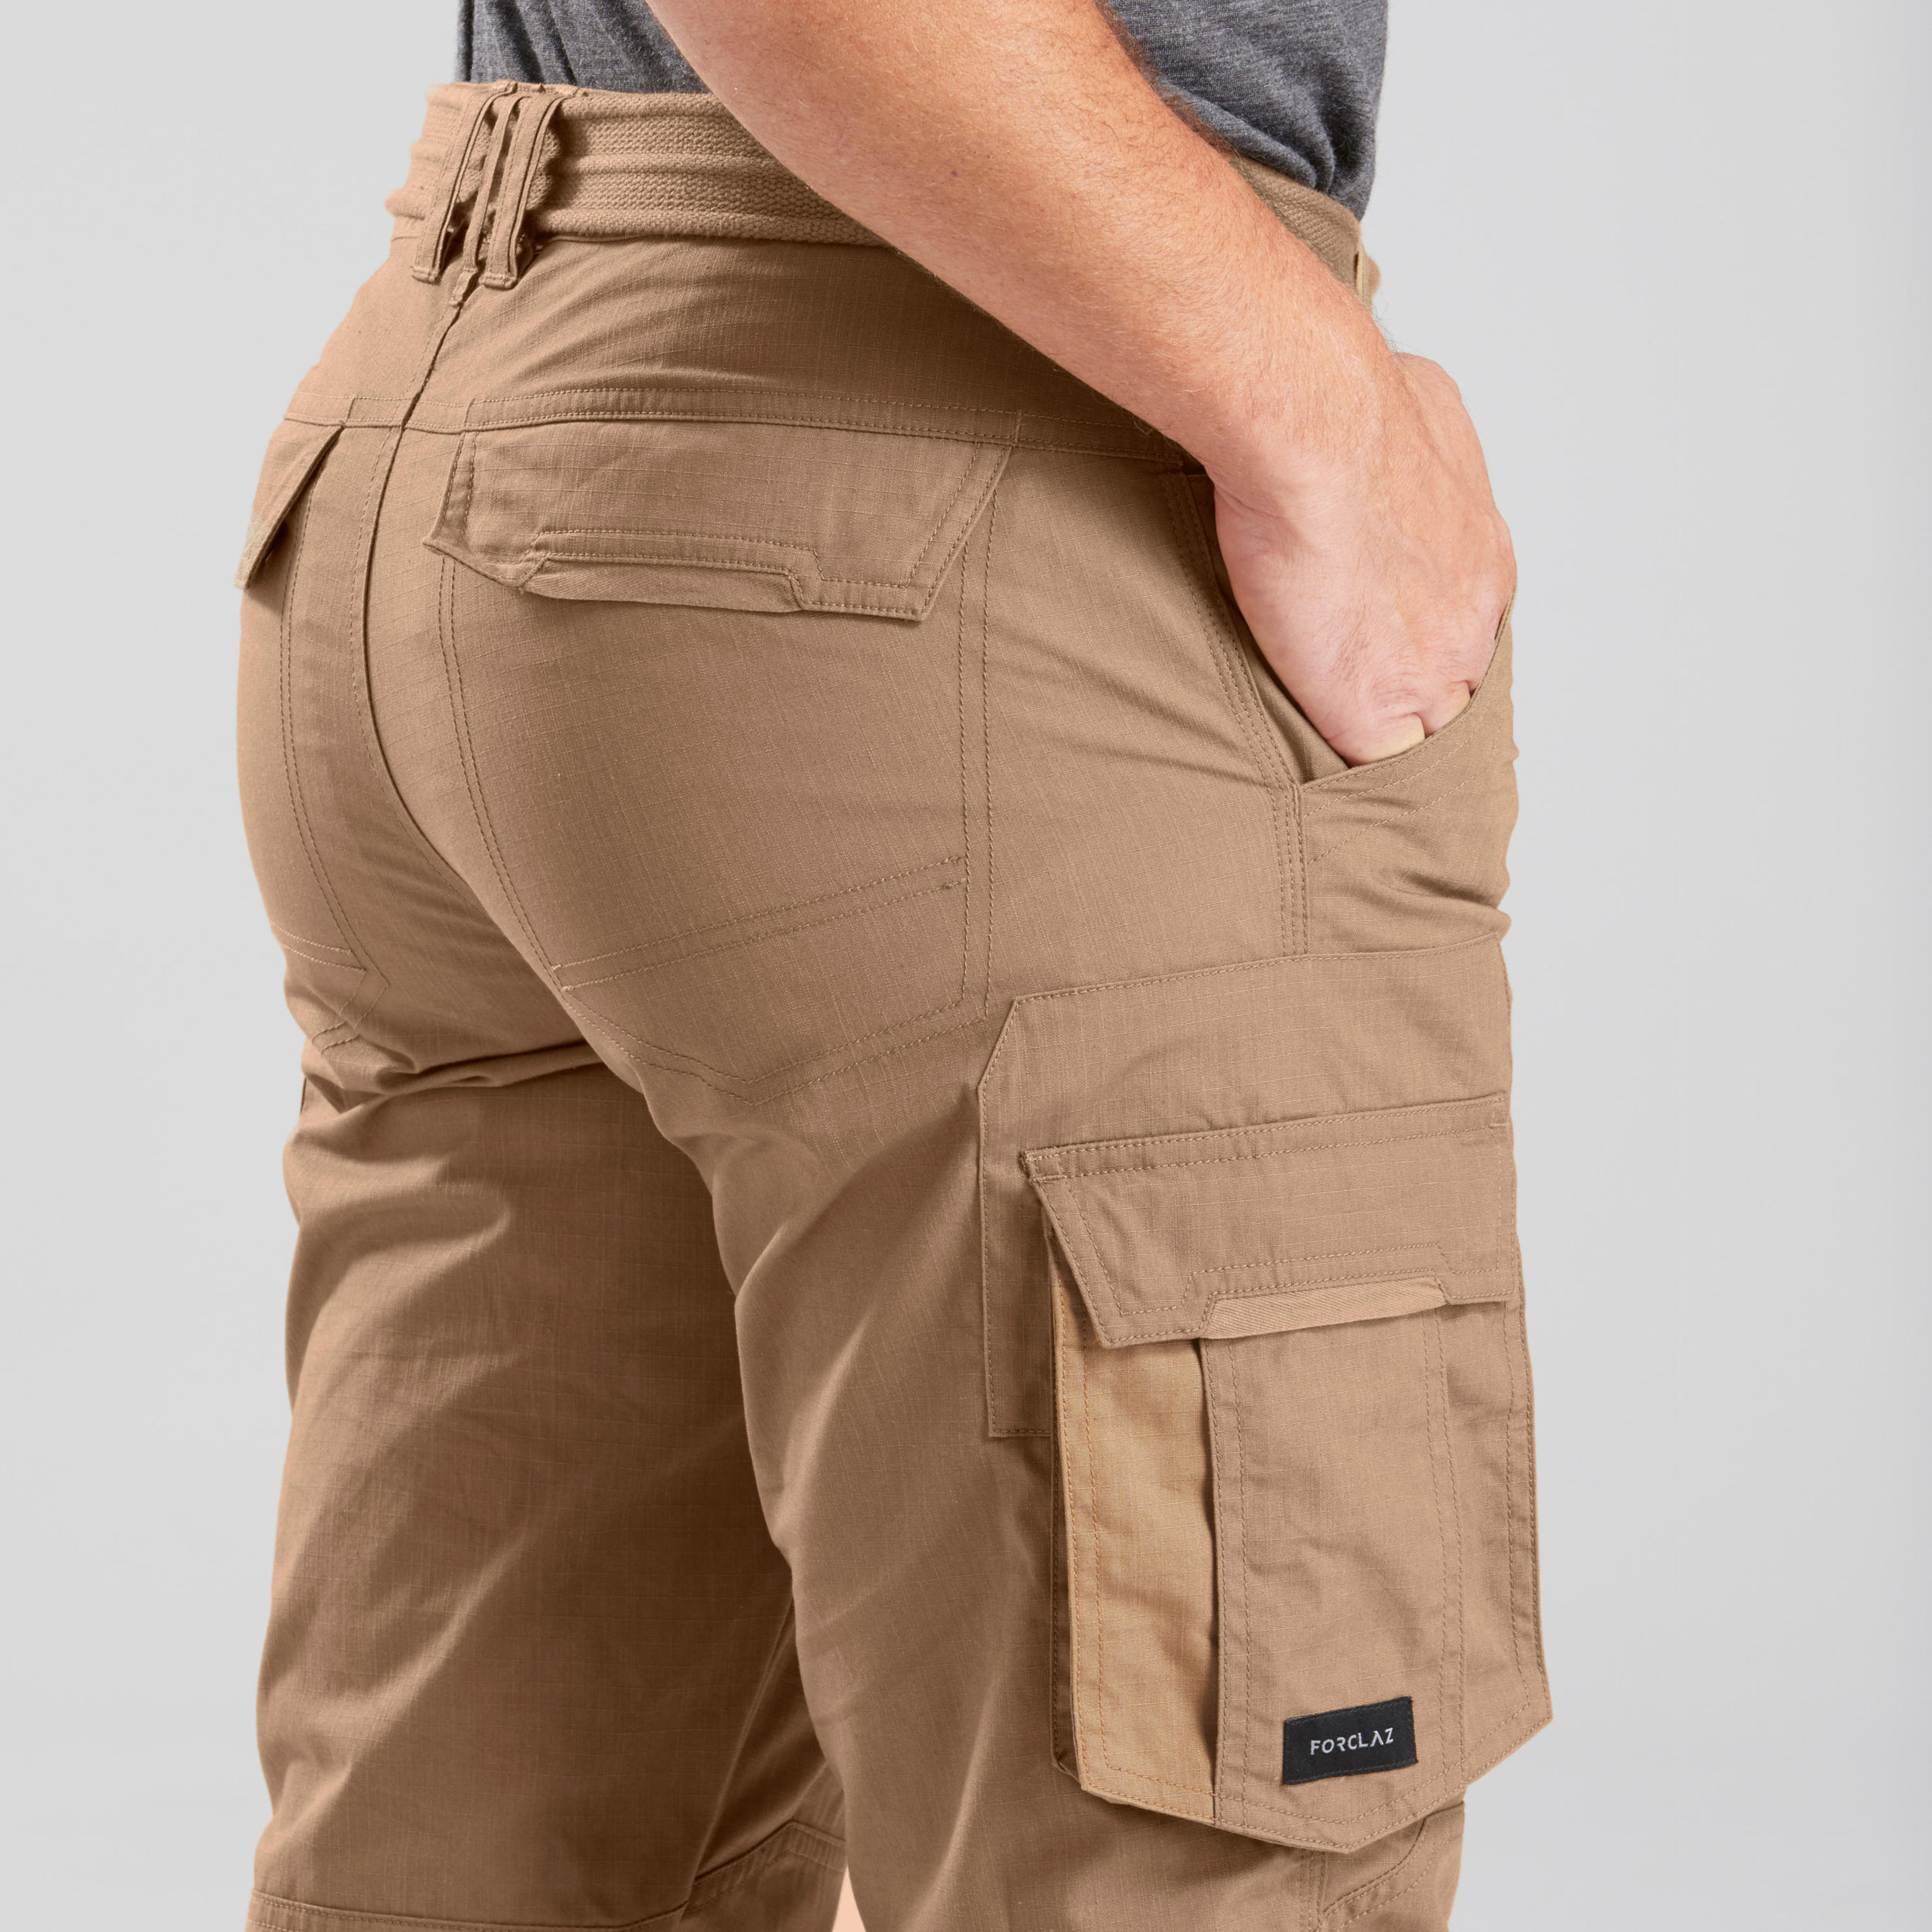 Men's Cargo Trousers Pants SG-900 - Khaki-hkpdtq2012.edu.vn